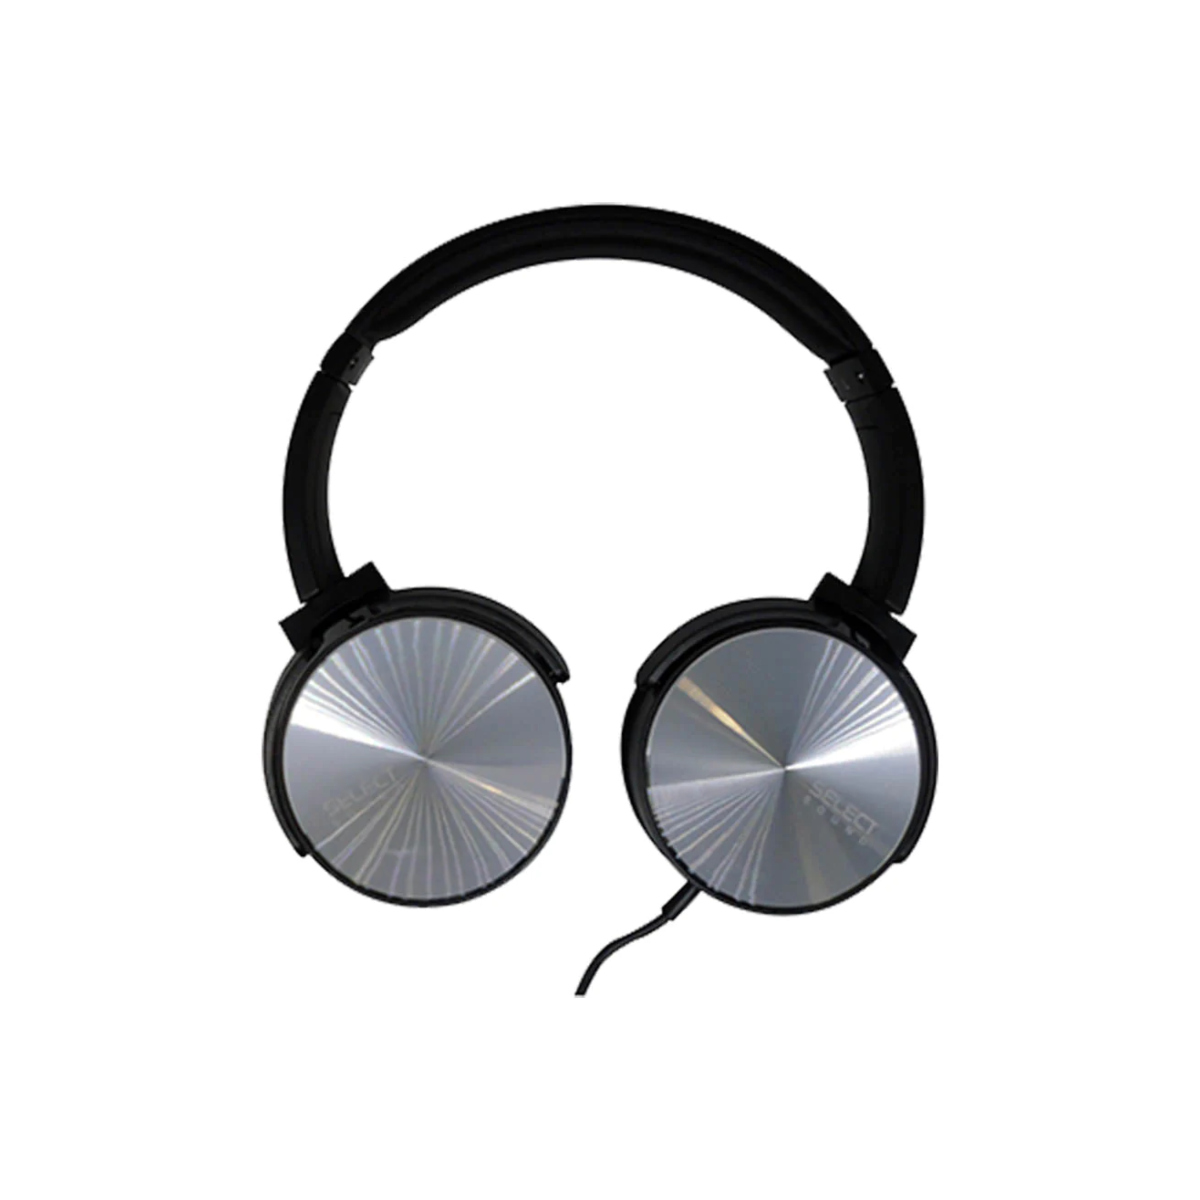 Select Sound H100 Audífonos HI-FI, color plata